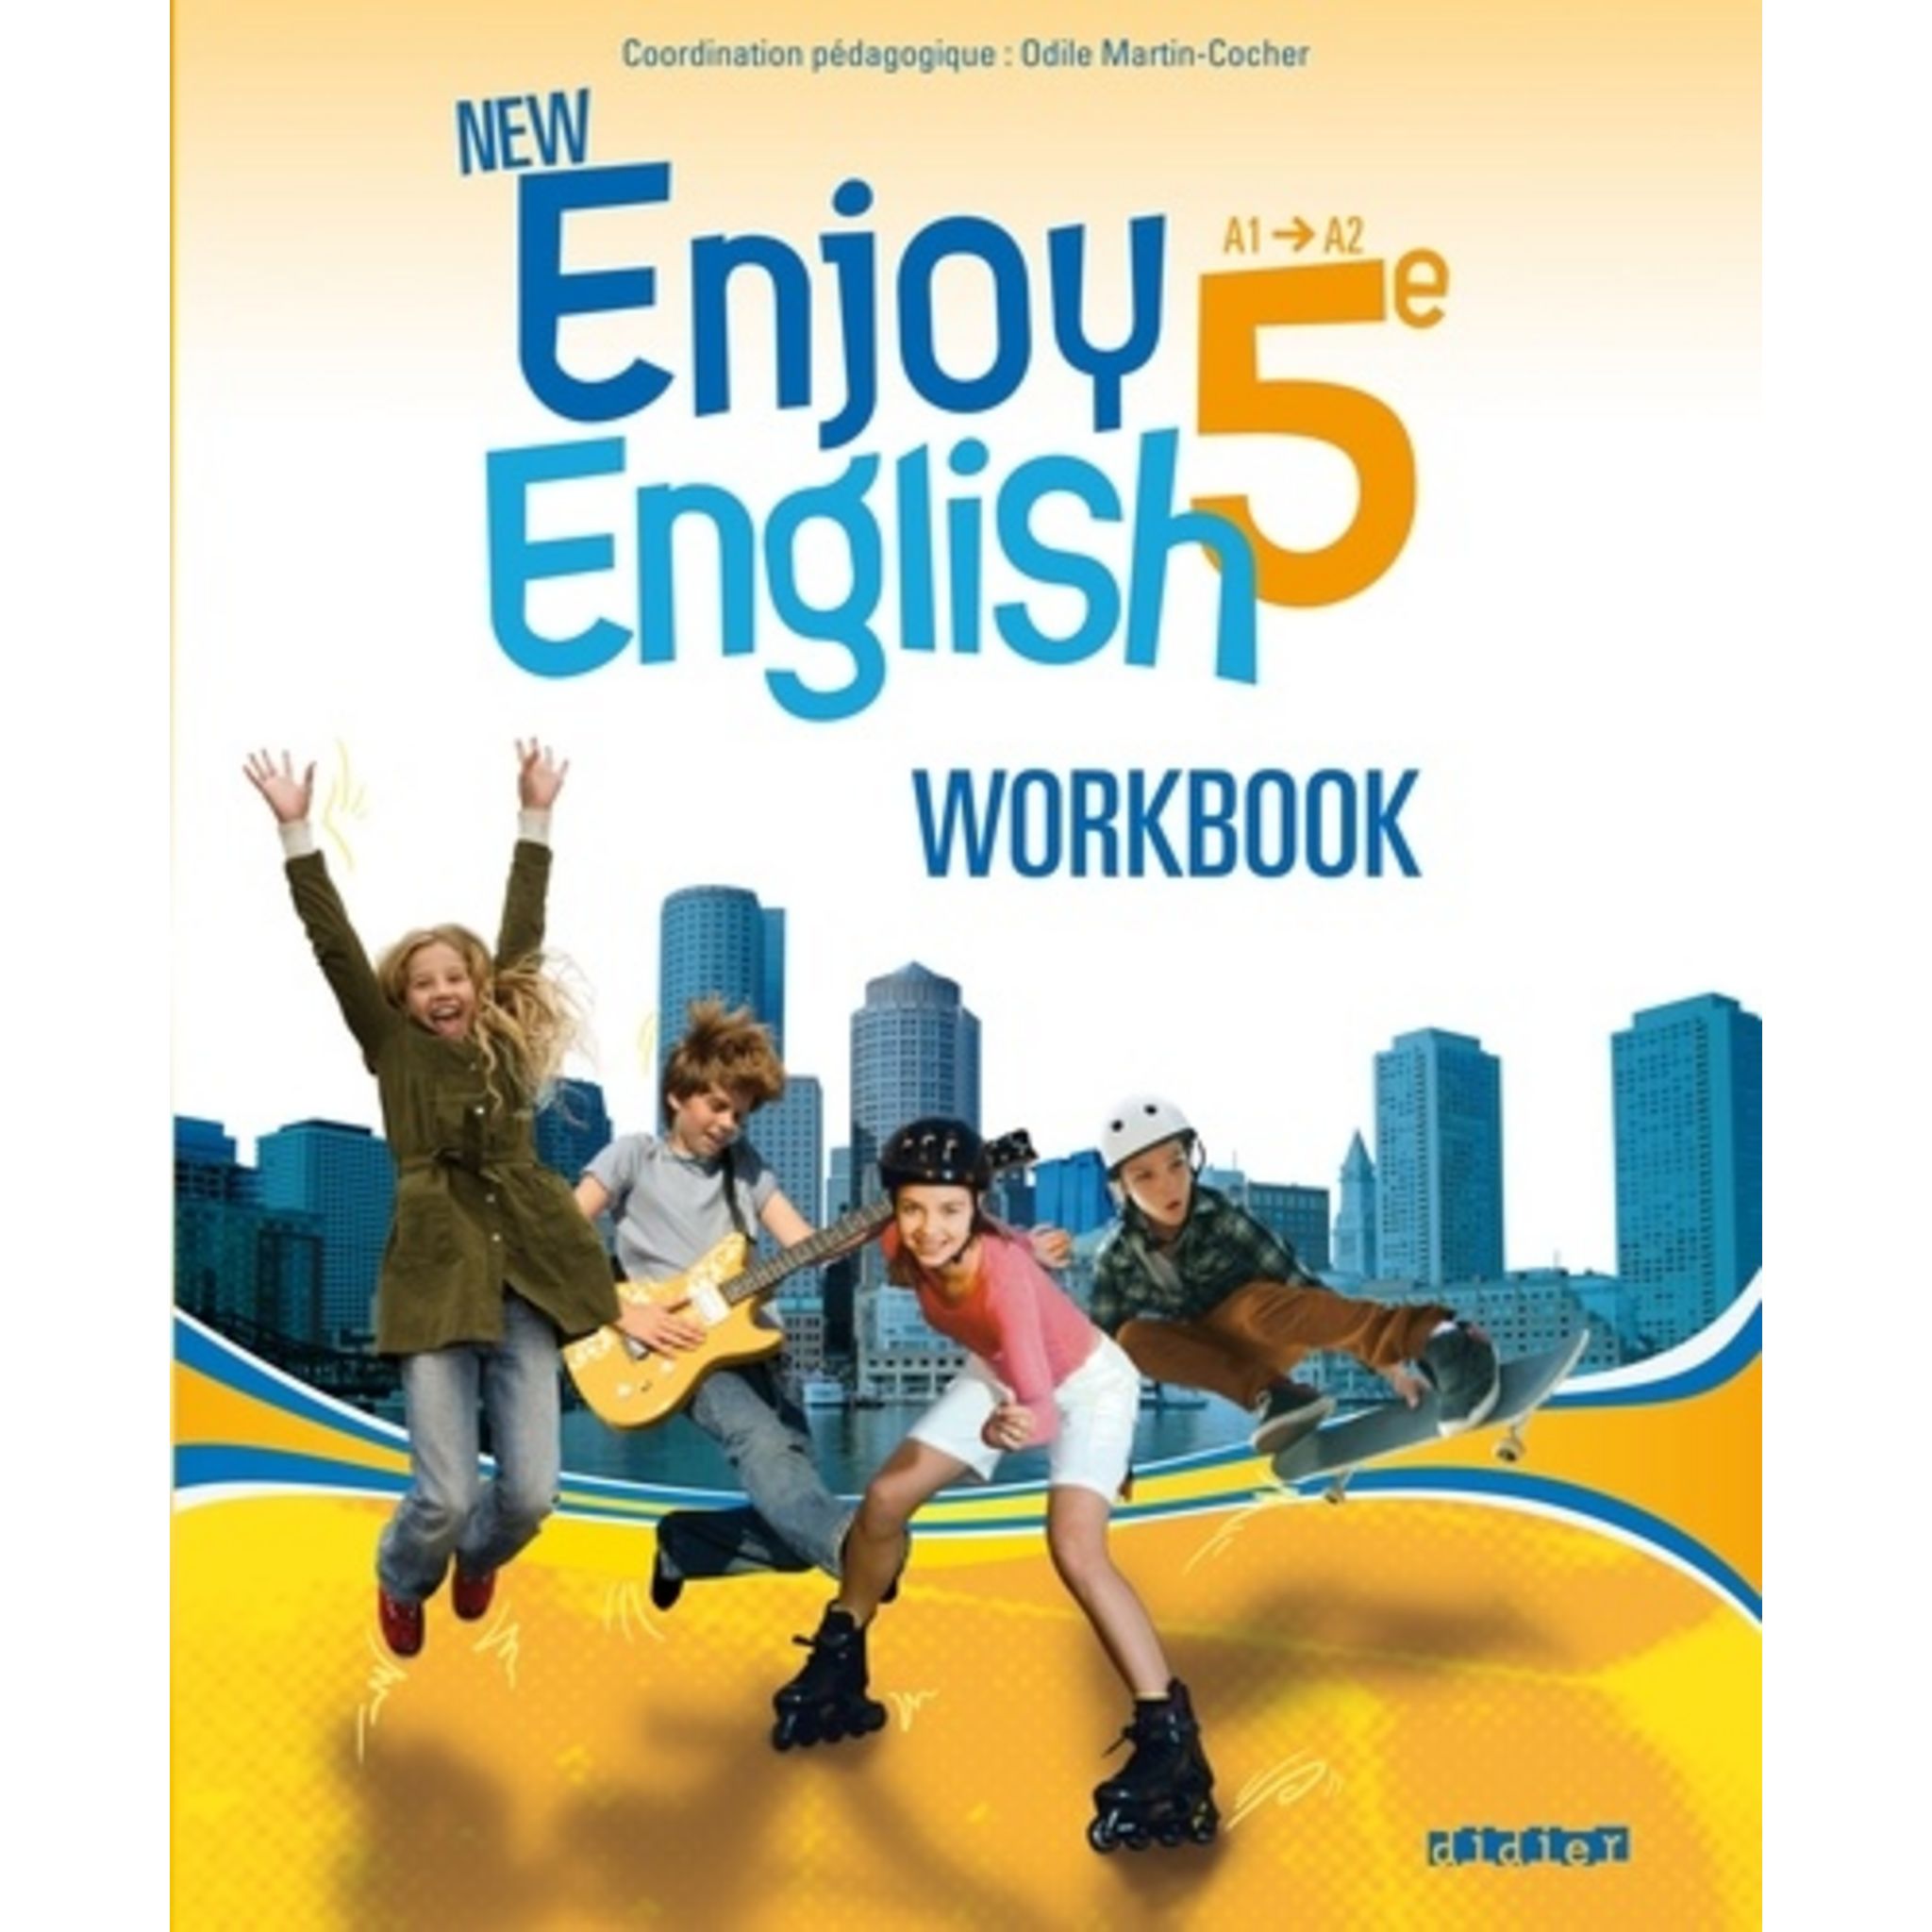 English workbook 5. Workbook. Enjoy English Workbook. Enjoy English 5. Энджой Инглиш 5.